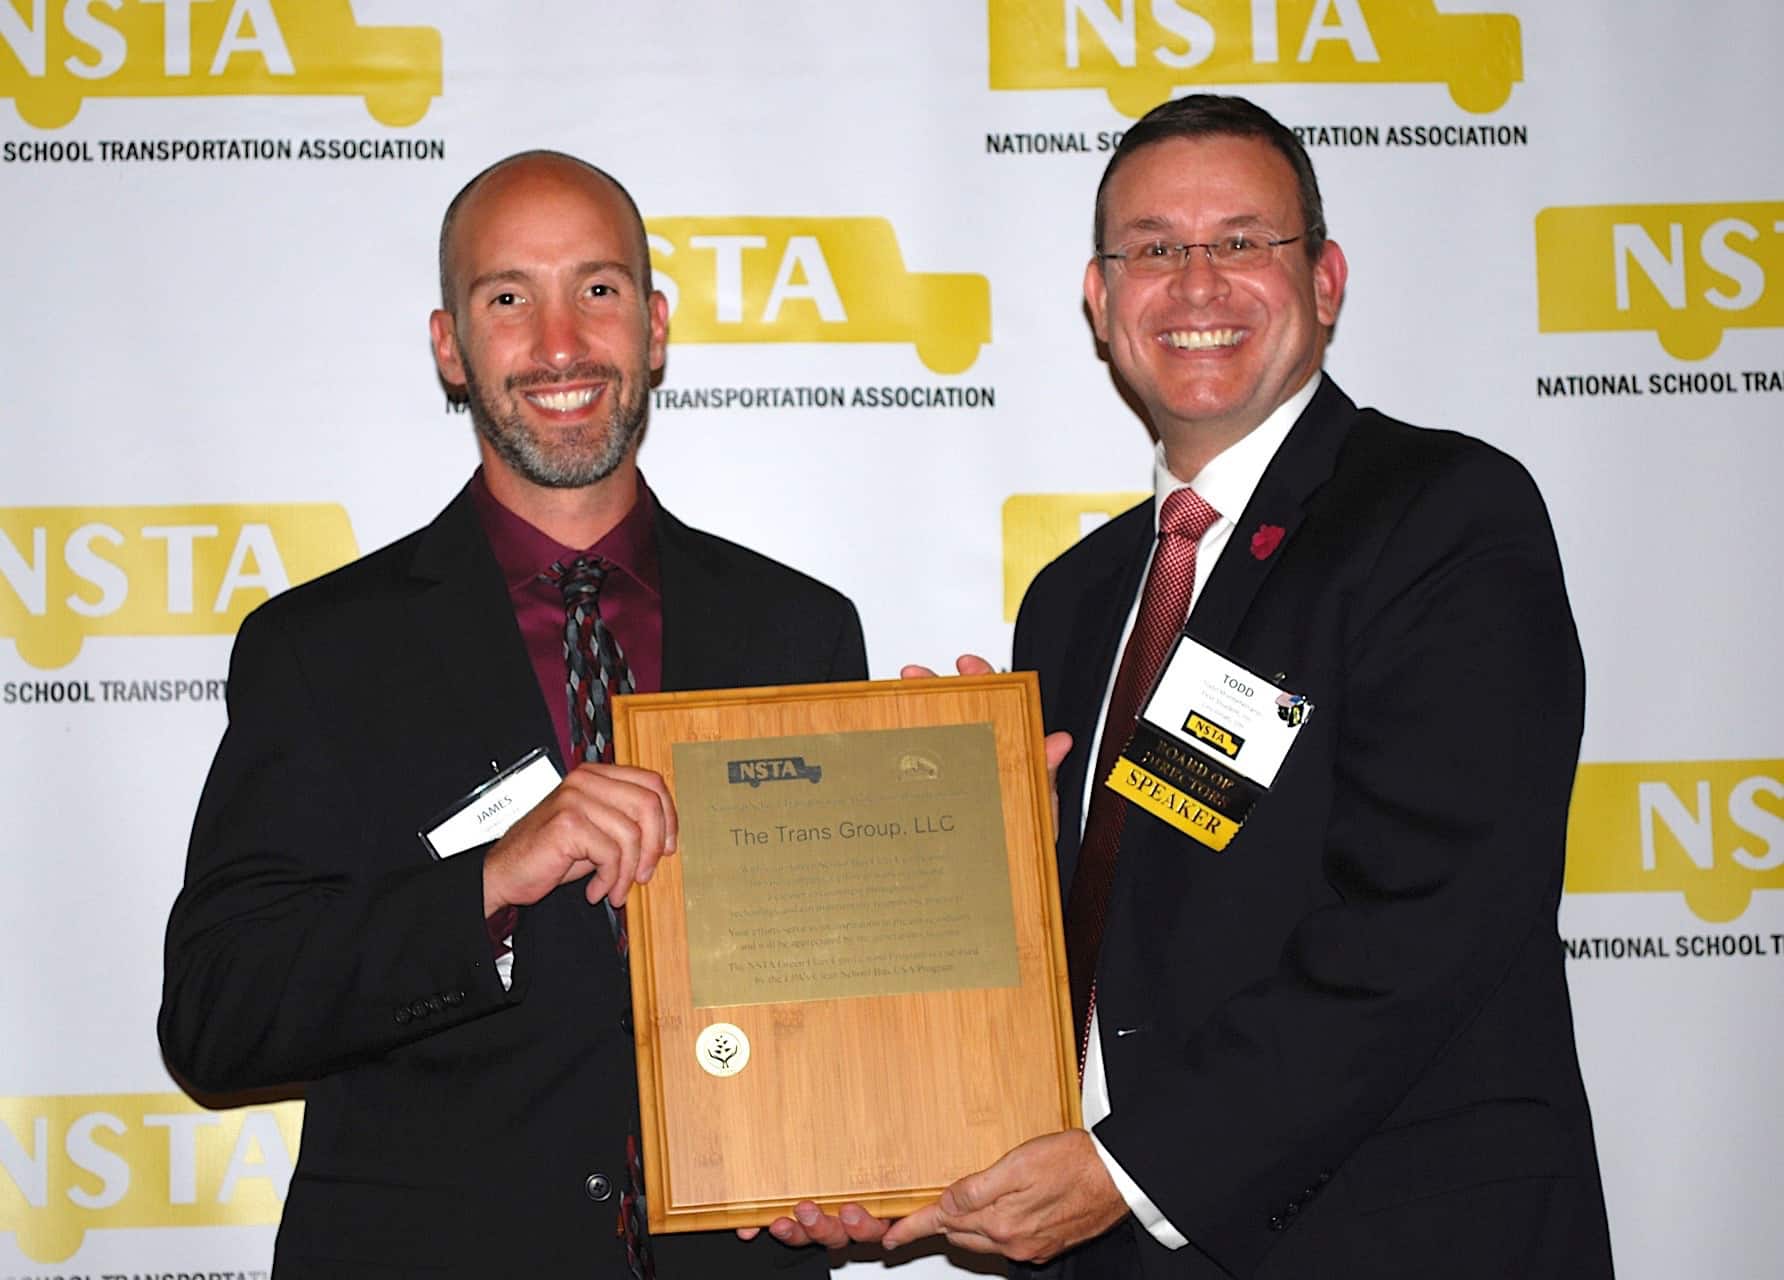 James Gocke NSTA award photo